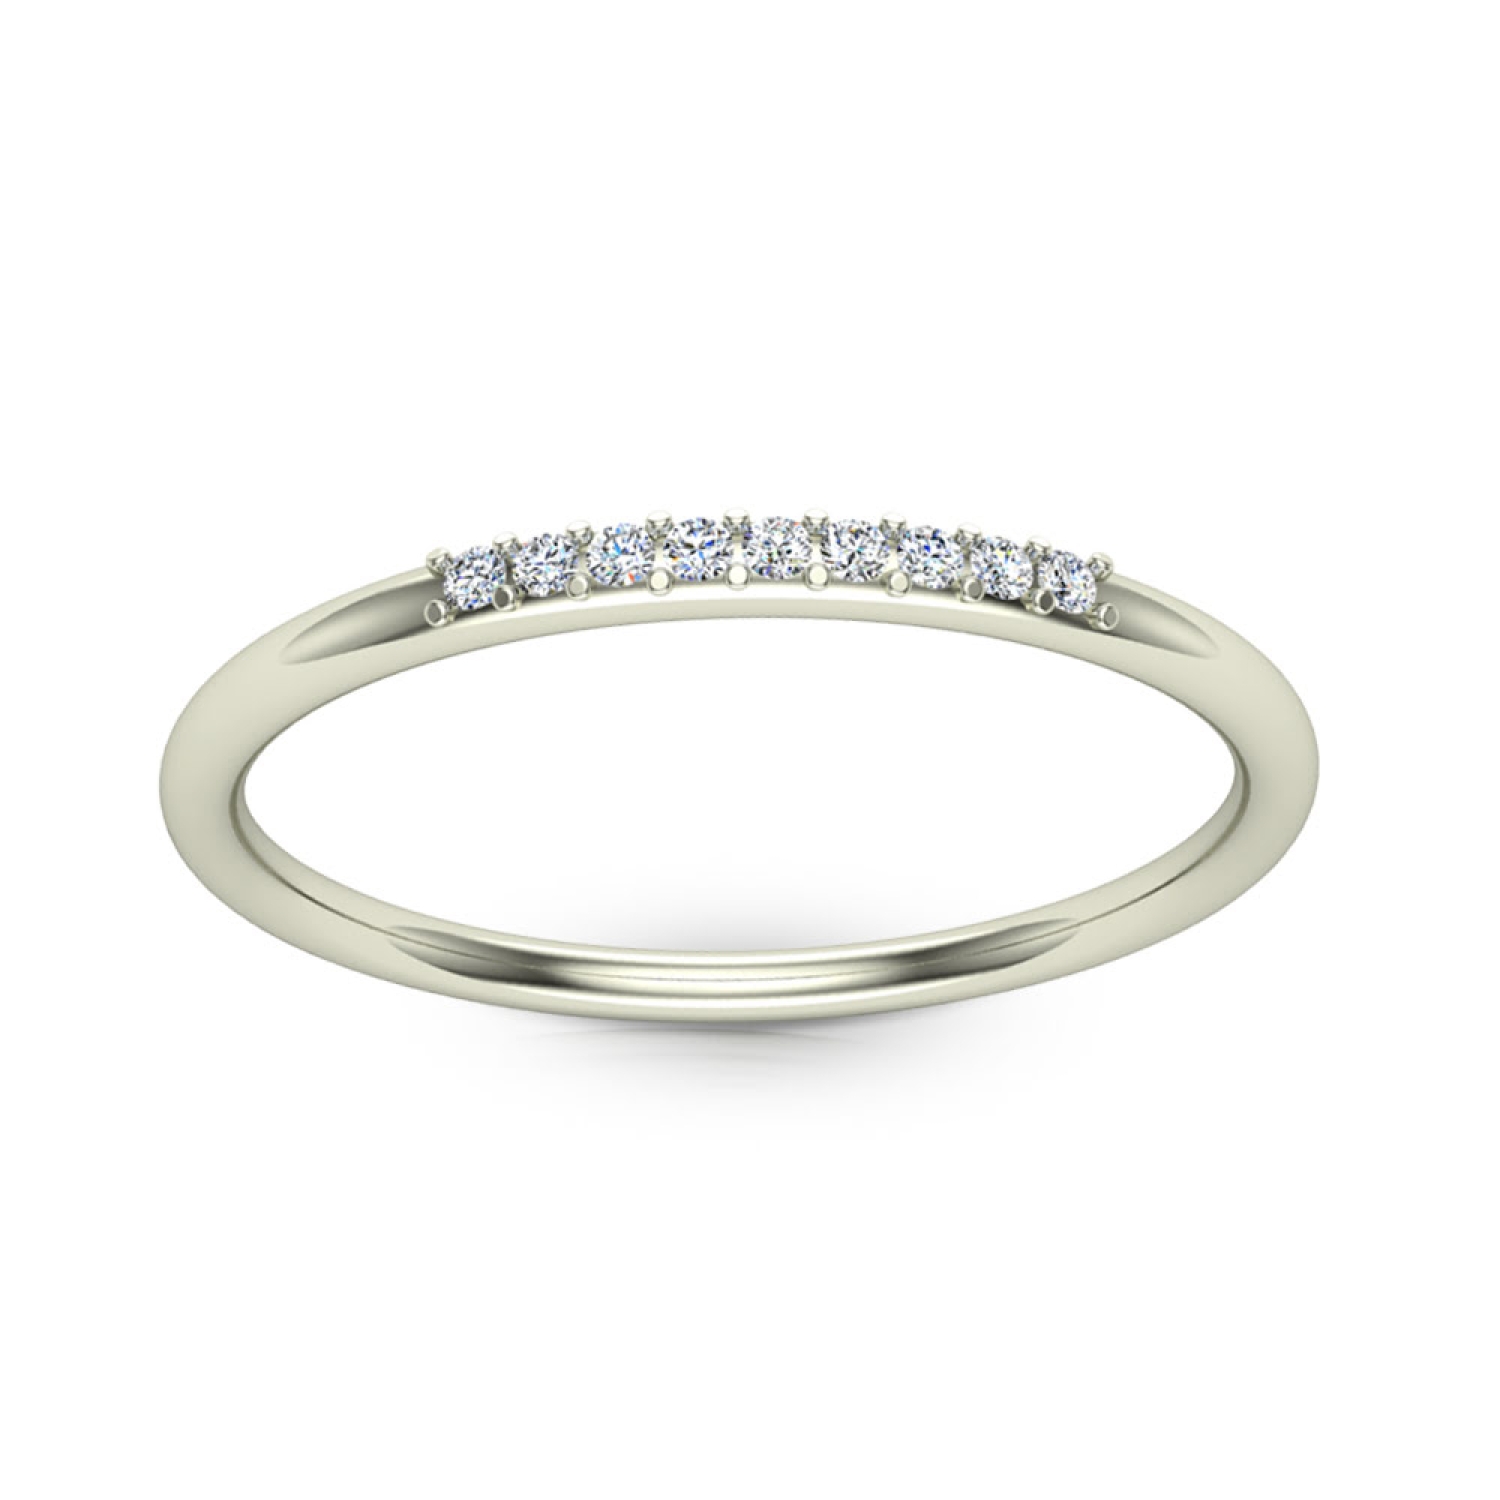 Buy Gold & American Diamond Jewellery Below ₹10000 Online In India -  49jewels.com